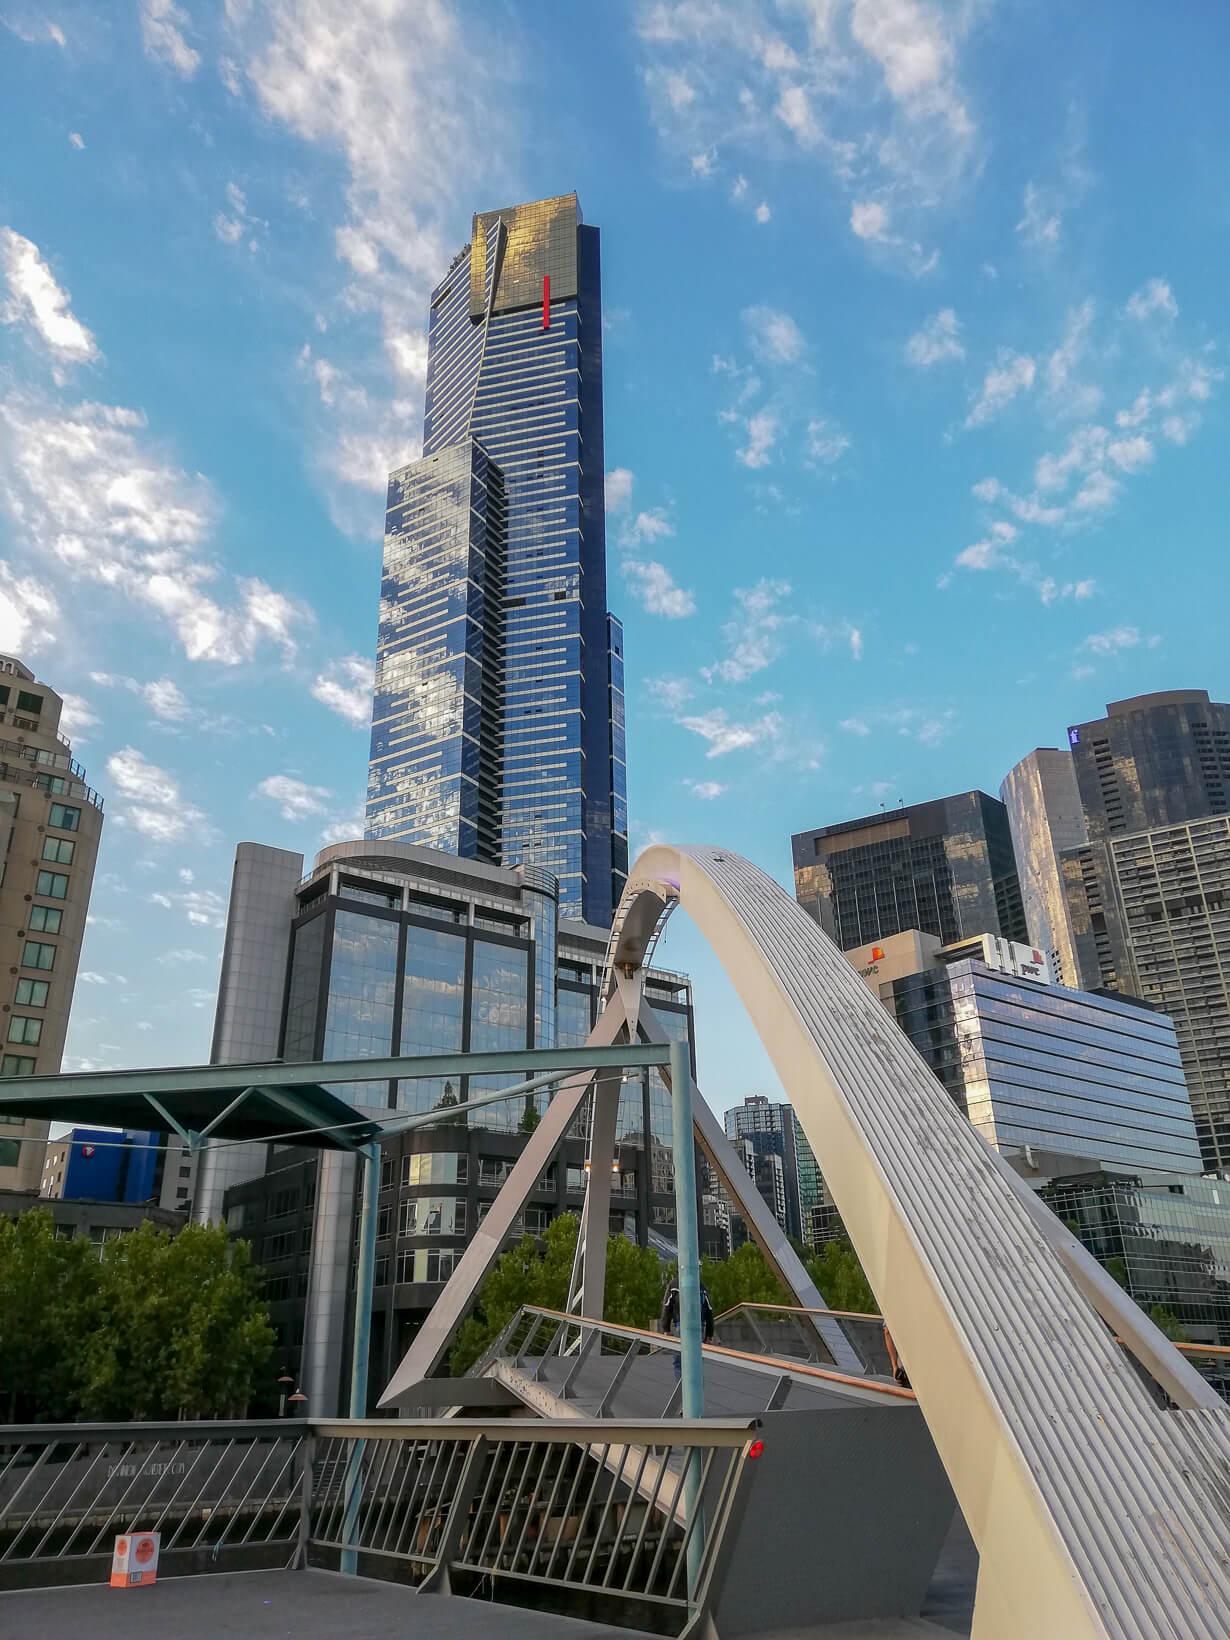 Melbourne skyline showing Eureka tower